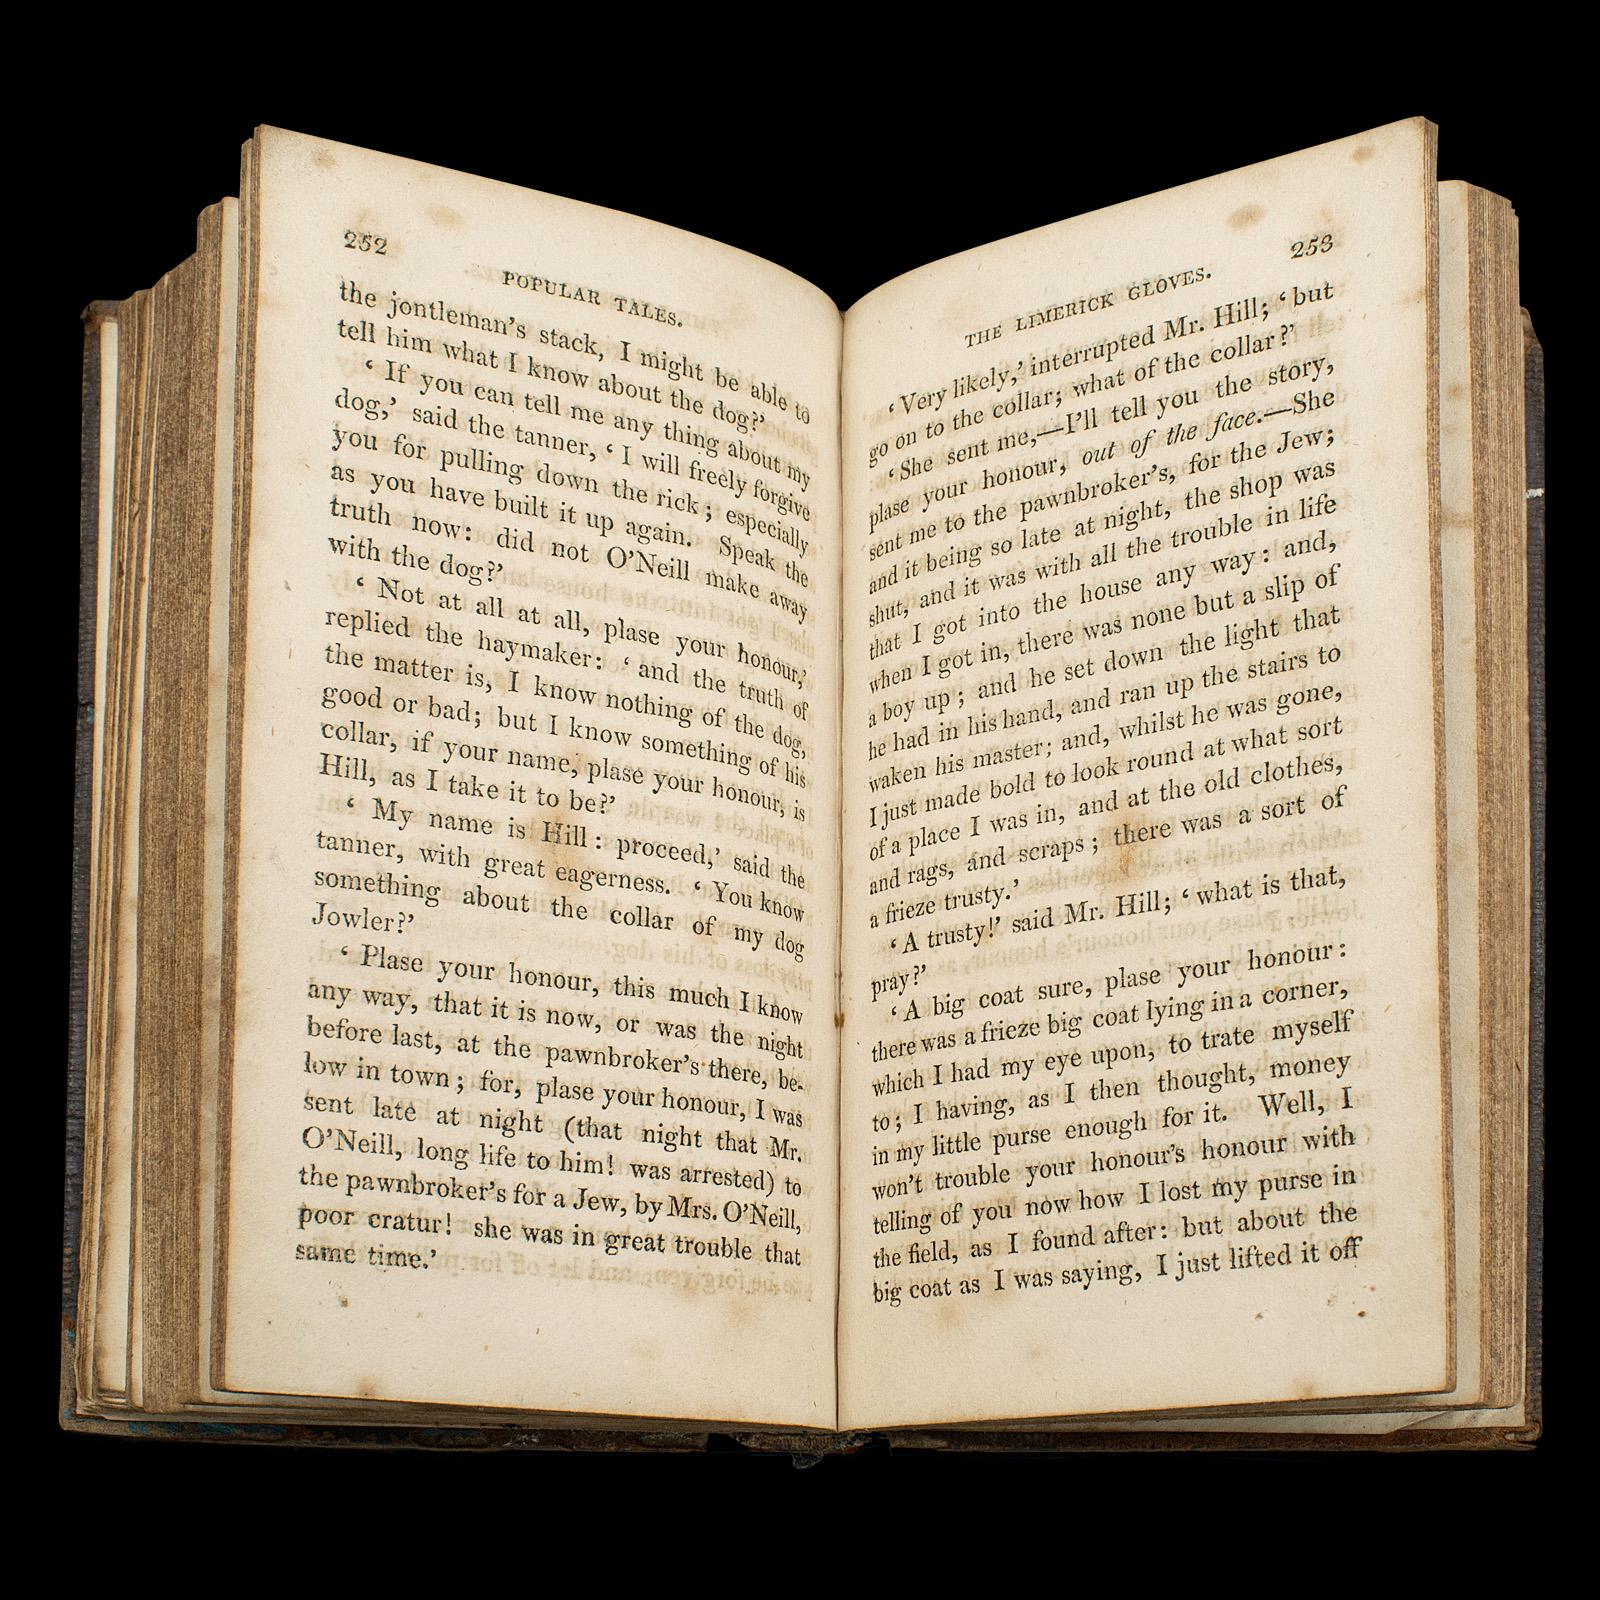 Paper Set Of Antique Fiction Books, Popular Tales, Maria Edgeworth, English, Georgian For Sale